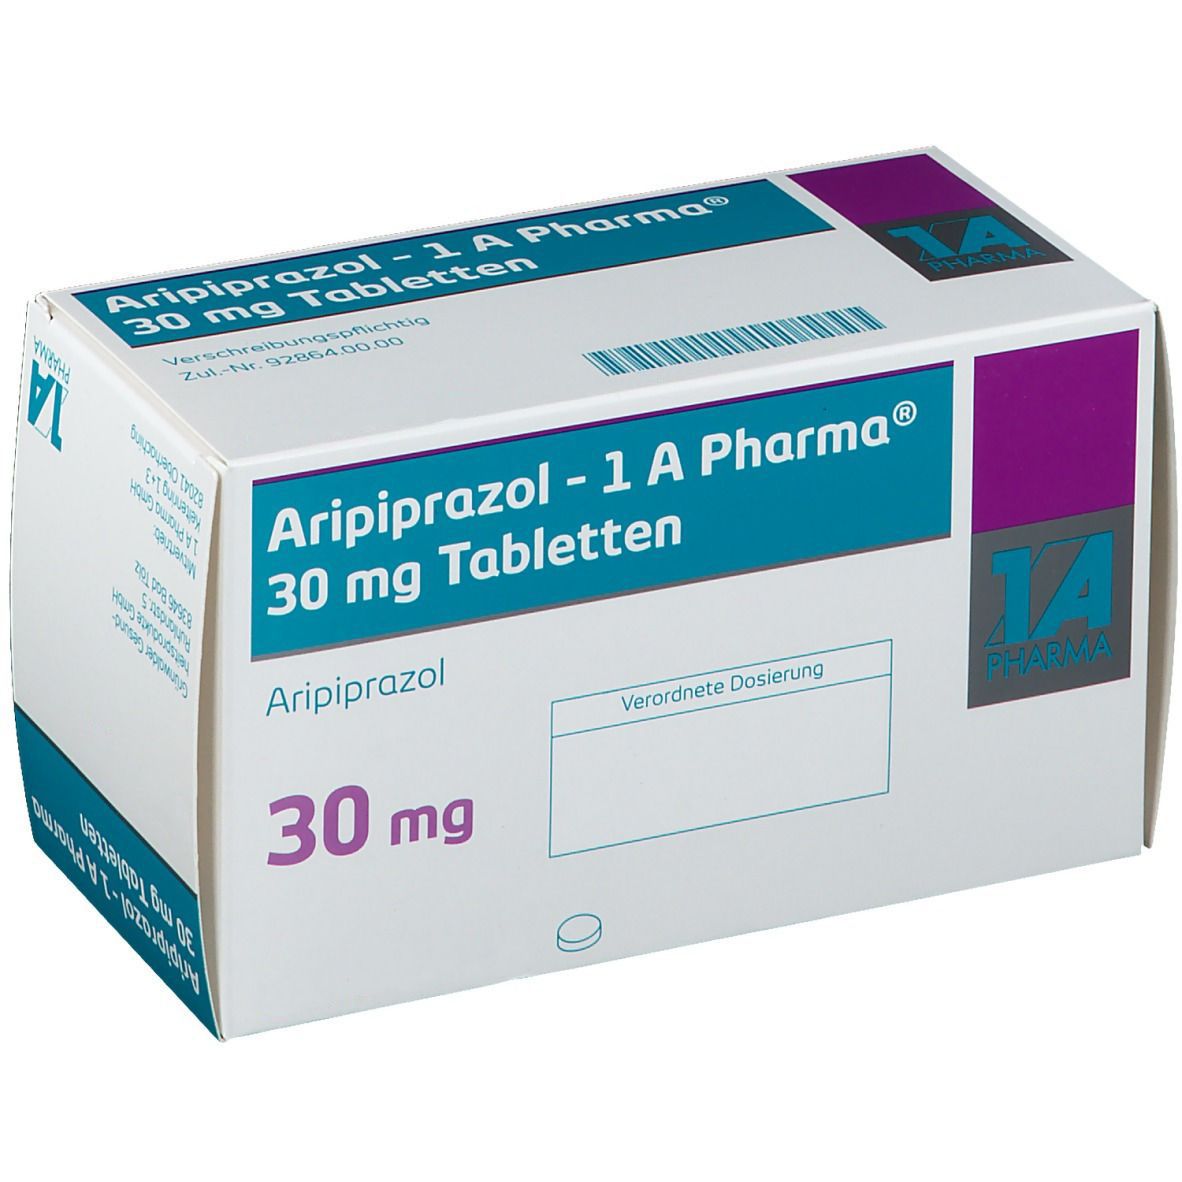 Aripiprazol - 1 A Pharma® 30 mg